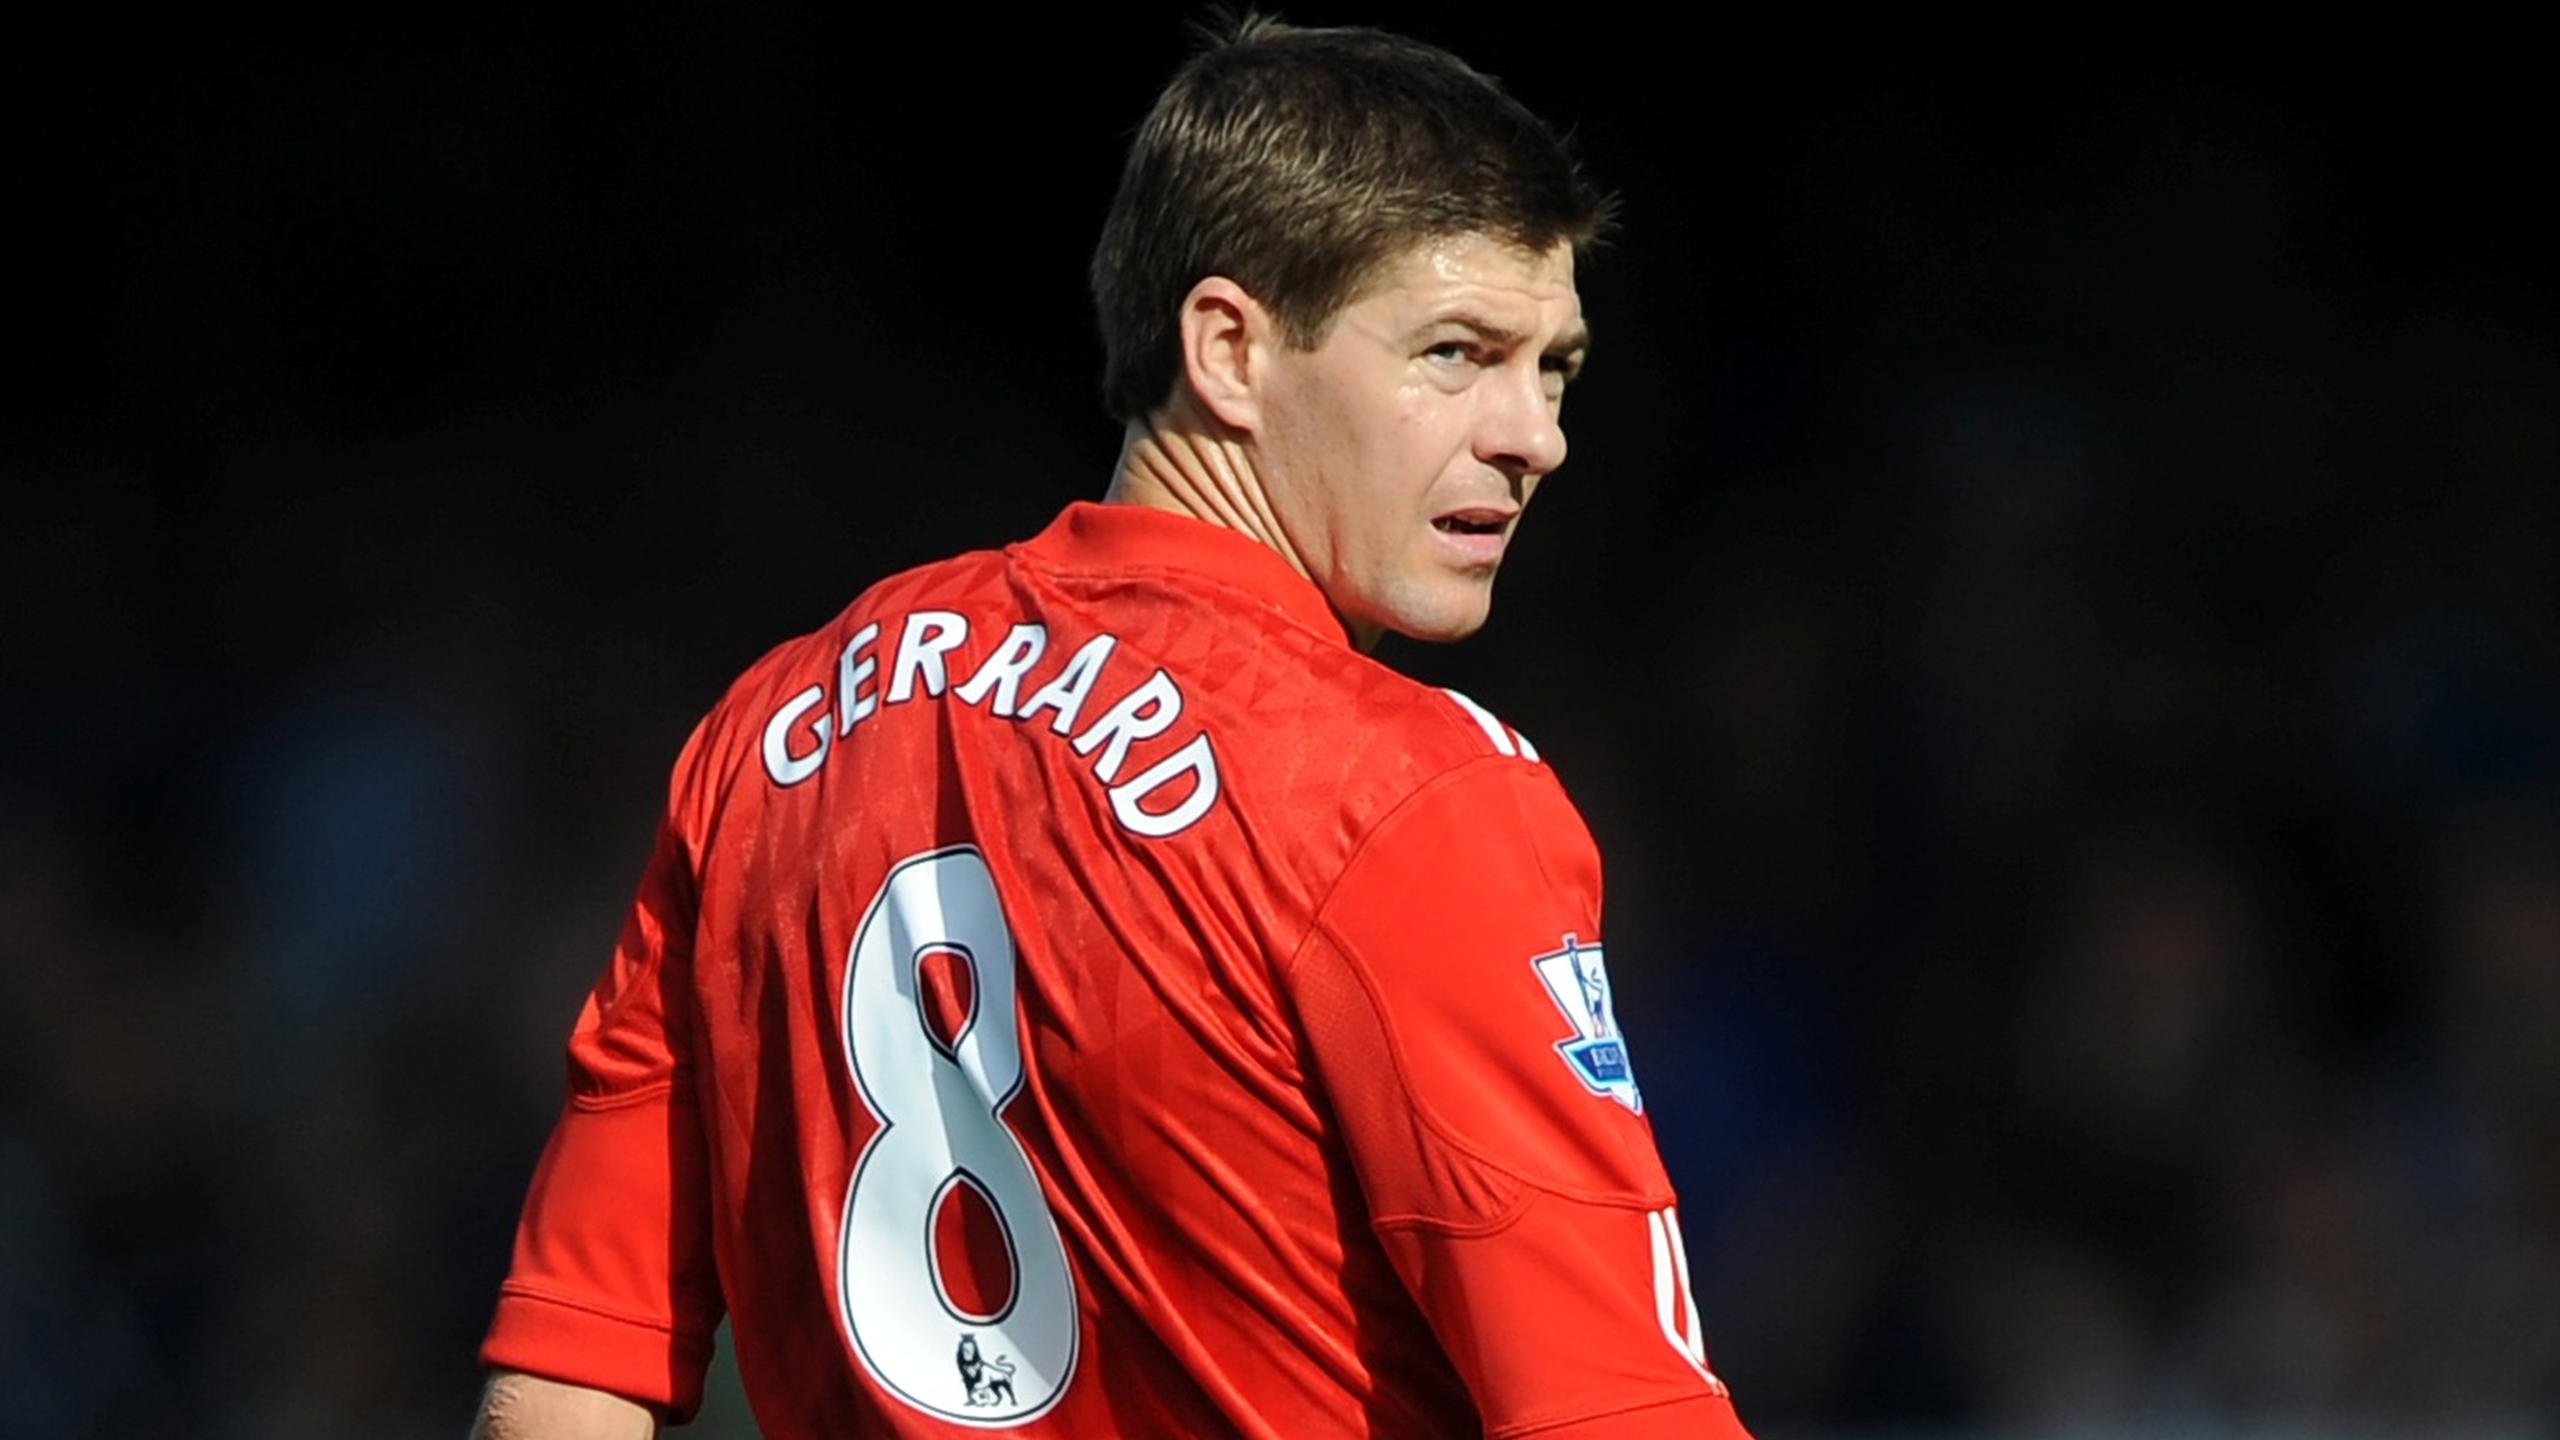 Gerrard set to face United - Eurosport